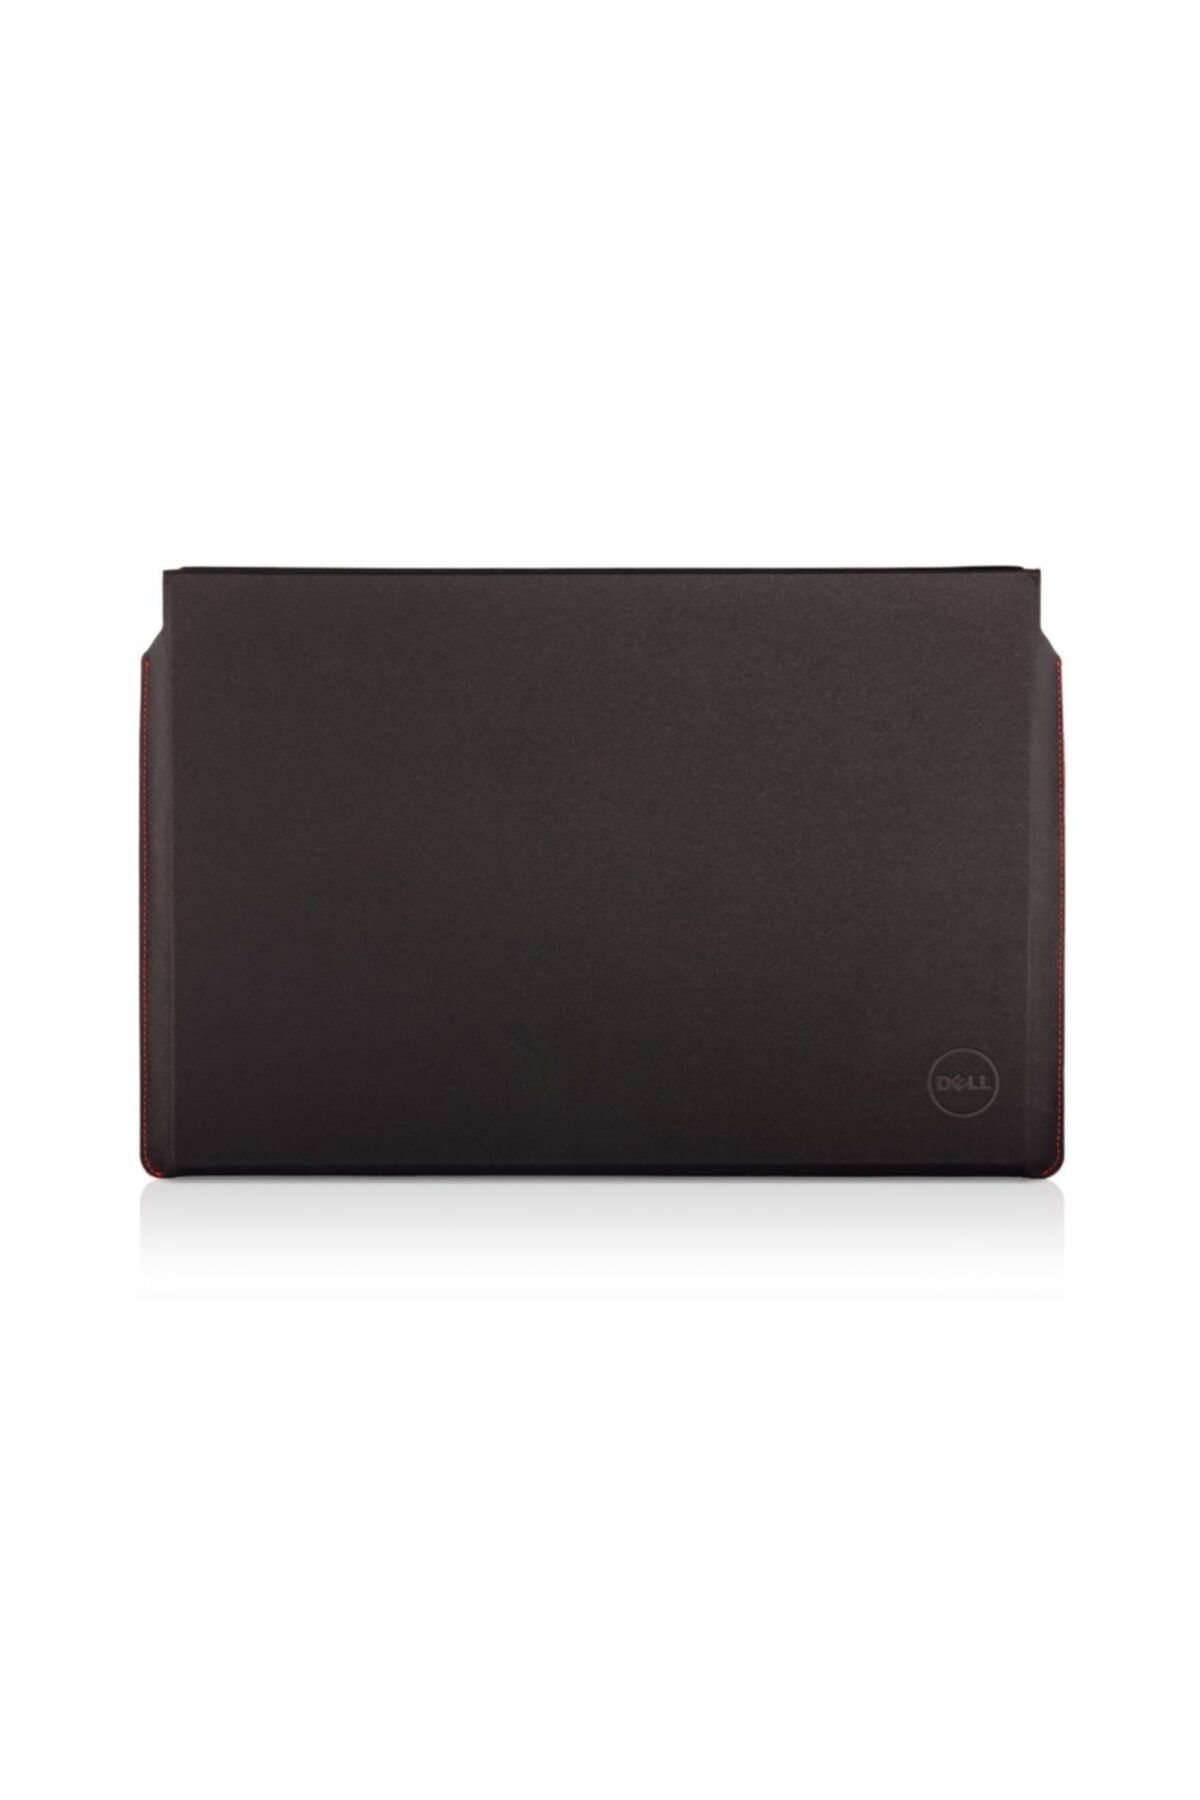 Dell Premier Sleeve 13 inç XPS Notebook Kılıfı Siyah 460-BCCU